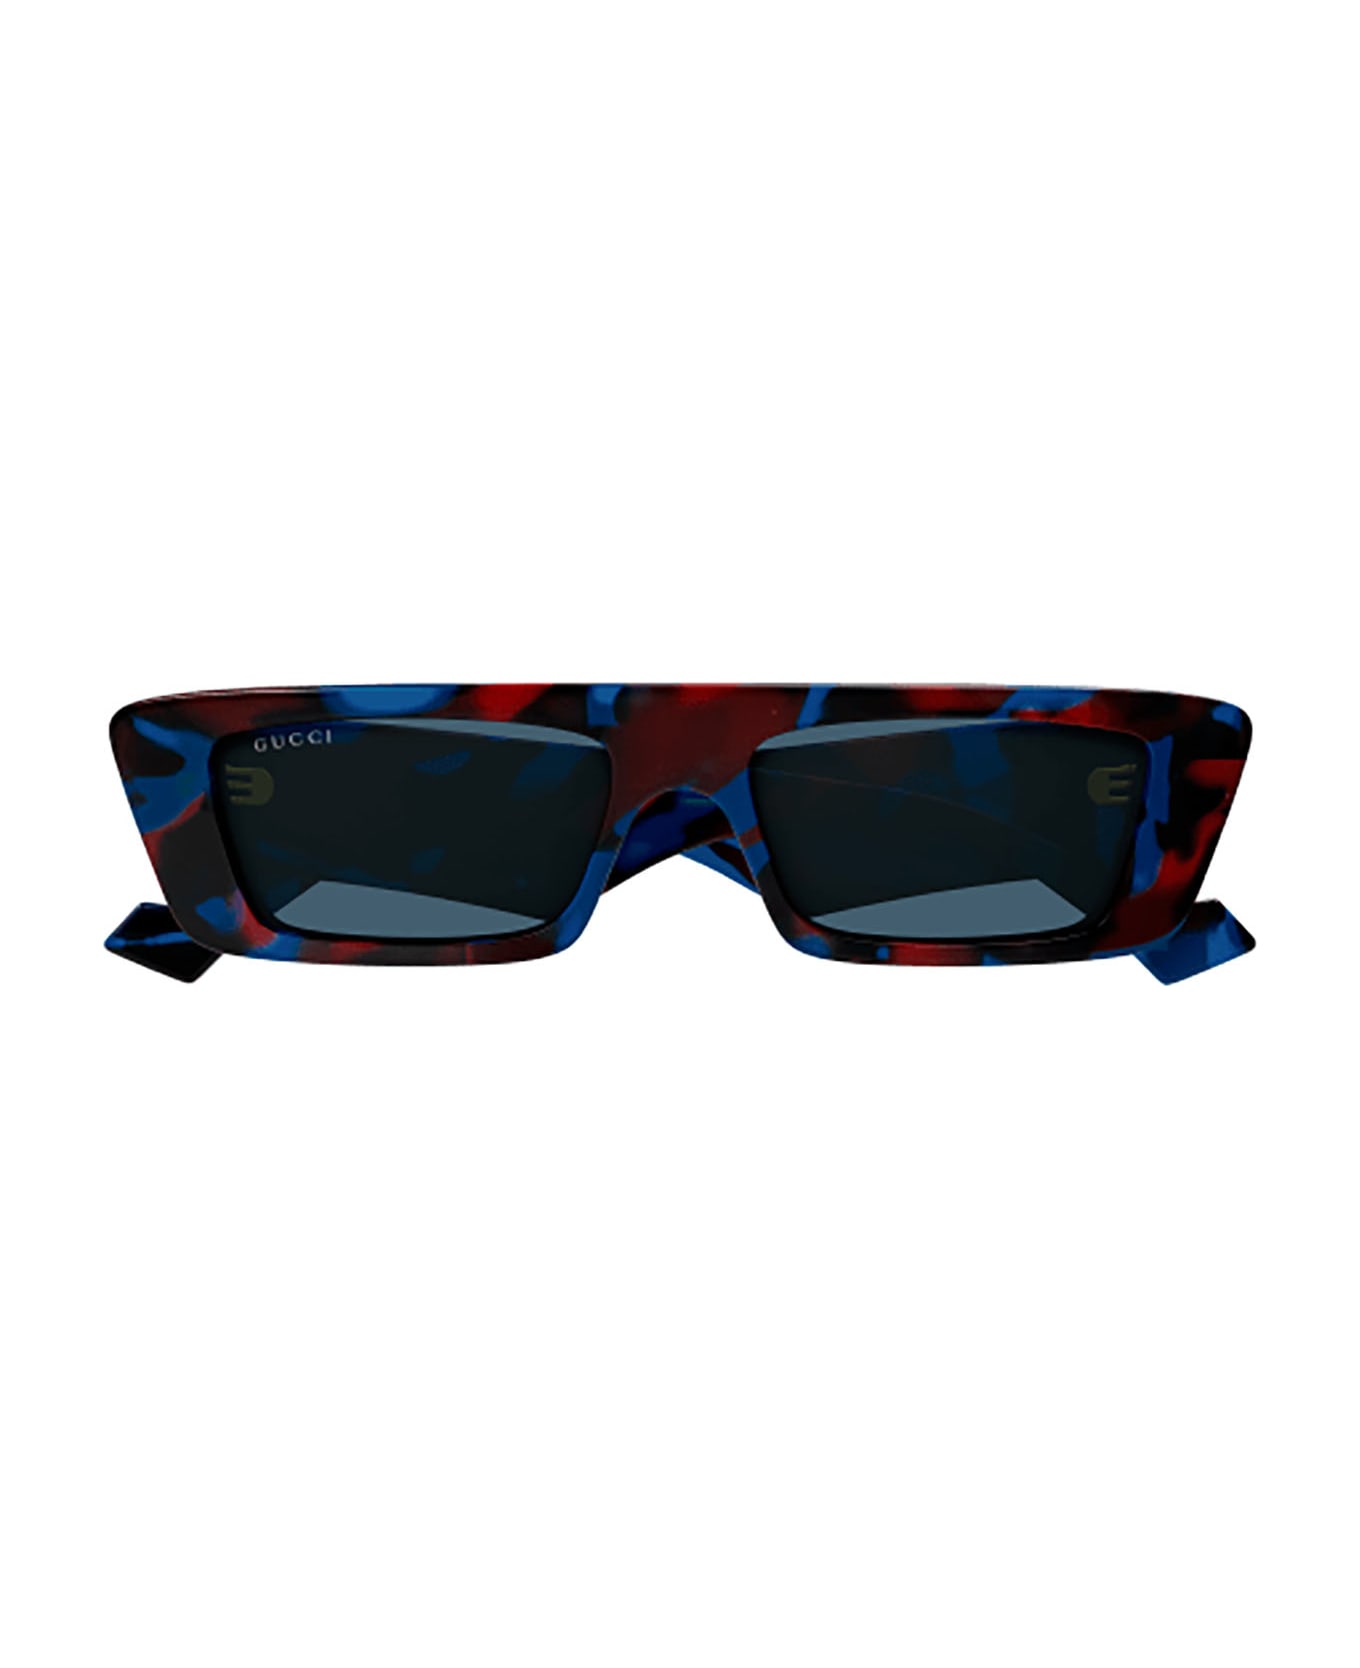 Gucci Eyewear GG1331S Sunglasses - Havana Havana Blue